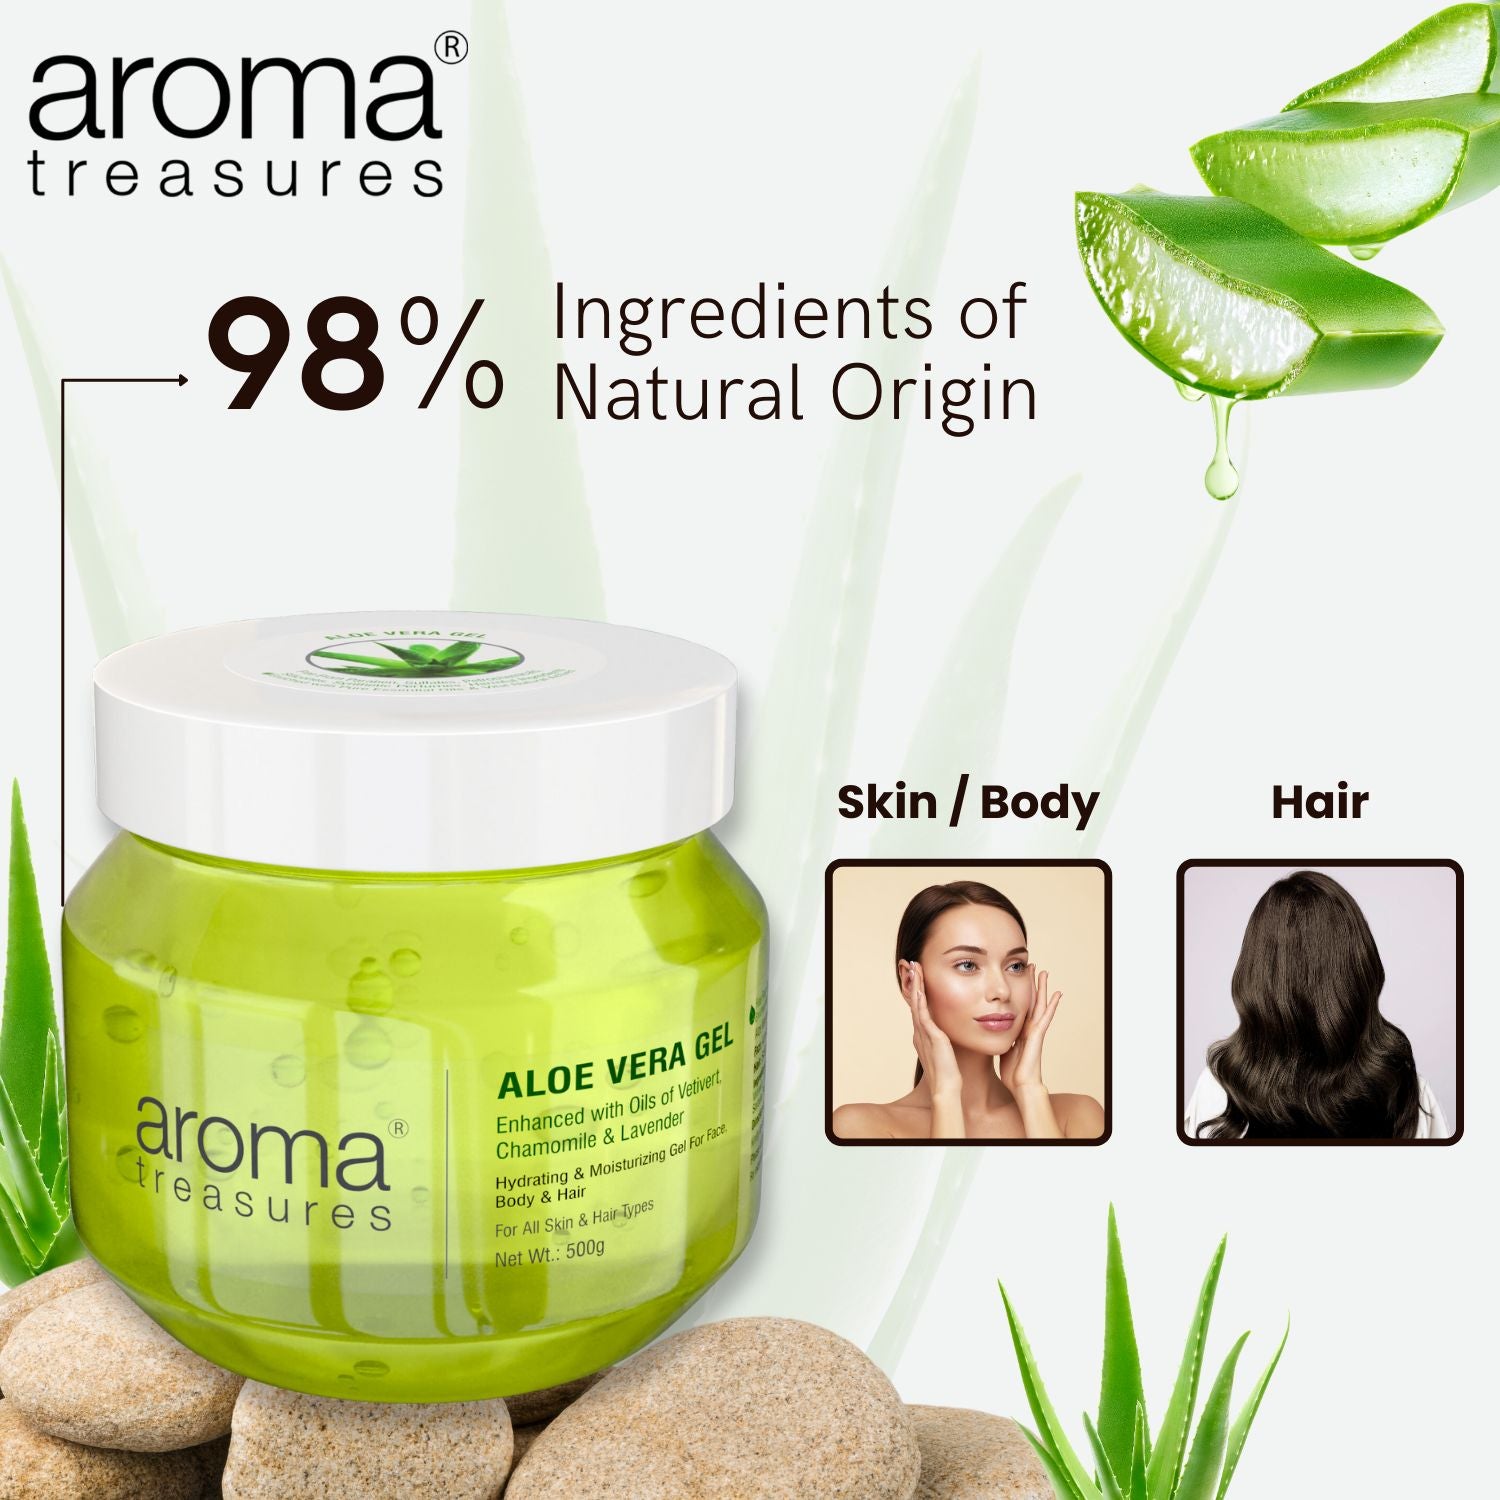 Aroma Treasures Aloe Vera Gel (Hydrating & Moisturizing Gel For Face, Body & Hair) - 500g